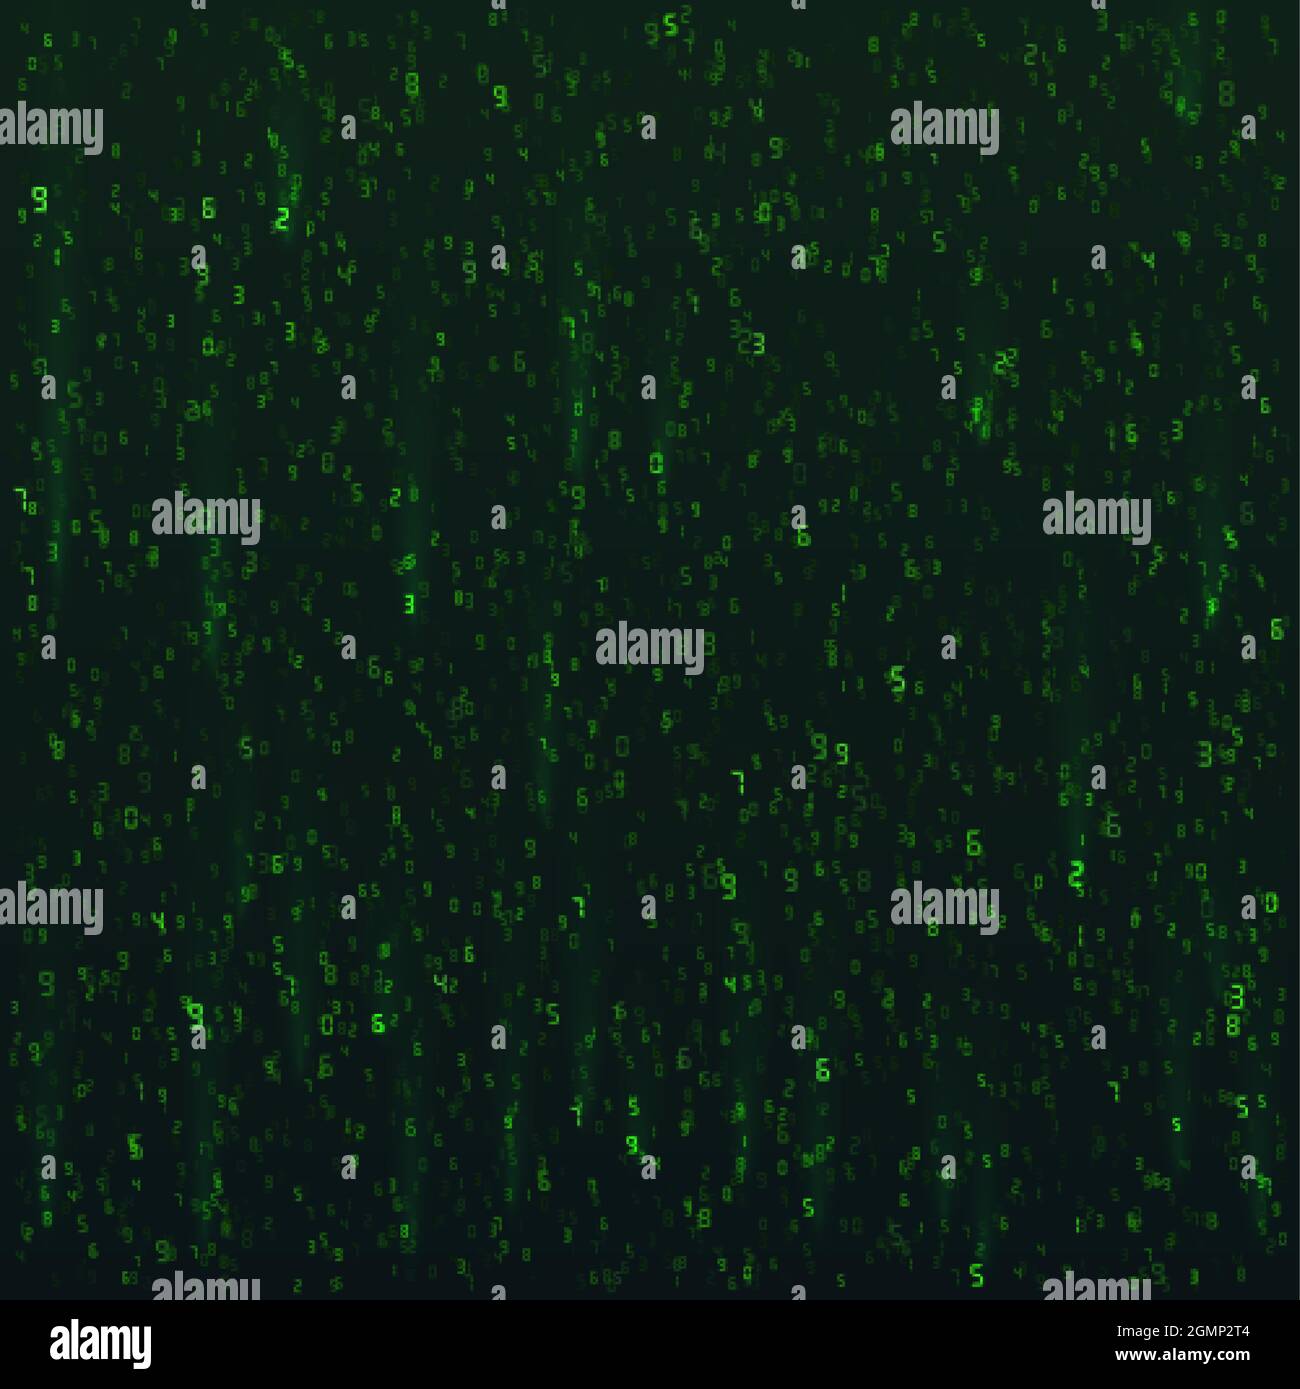 Hex code background. Digital data stream in green colors. Matrix. Vector illustration Stock Vector